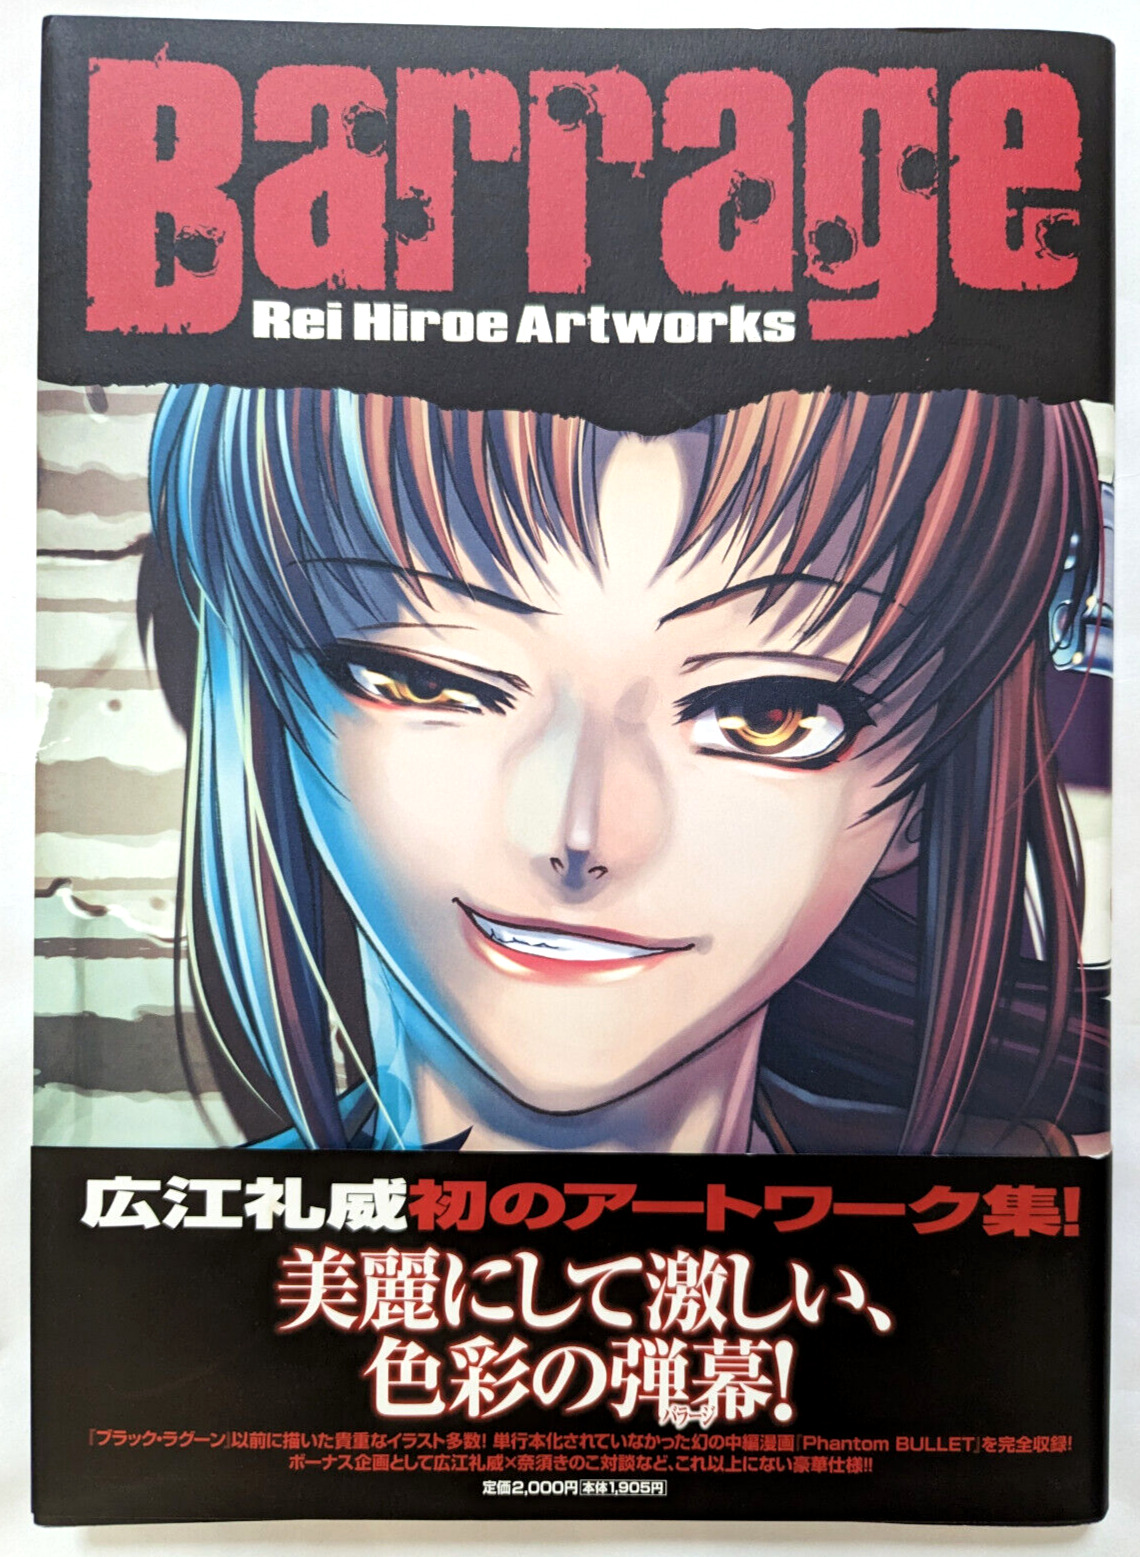 Barrage Rei Hiroe Artworks Black Lagoon Phantom Bullet Illustration with Obi